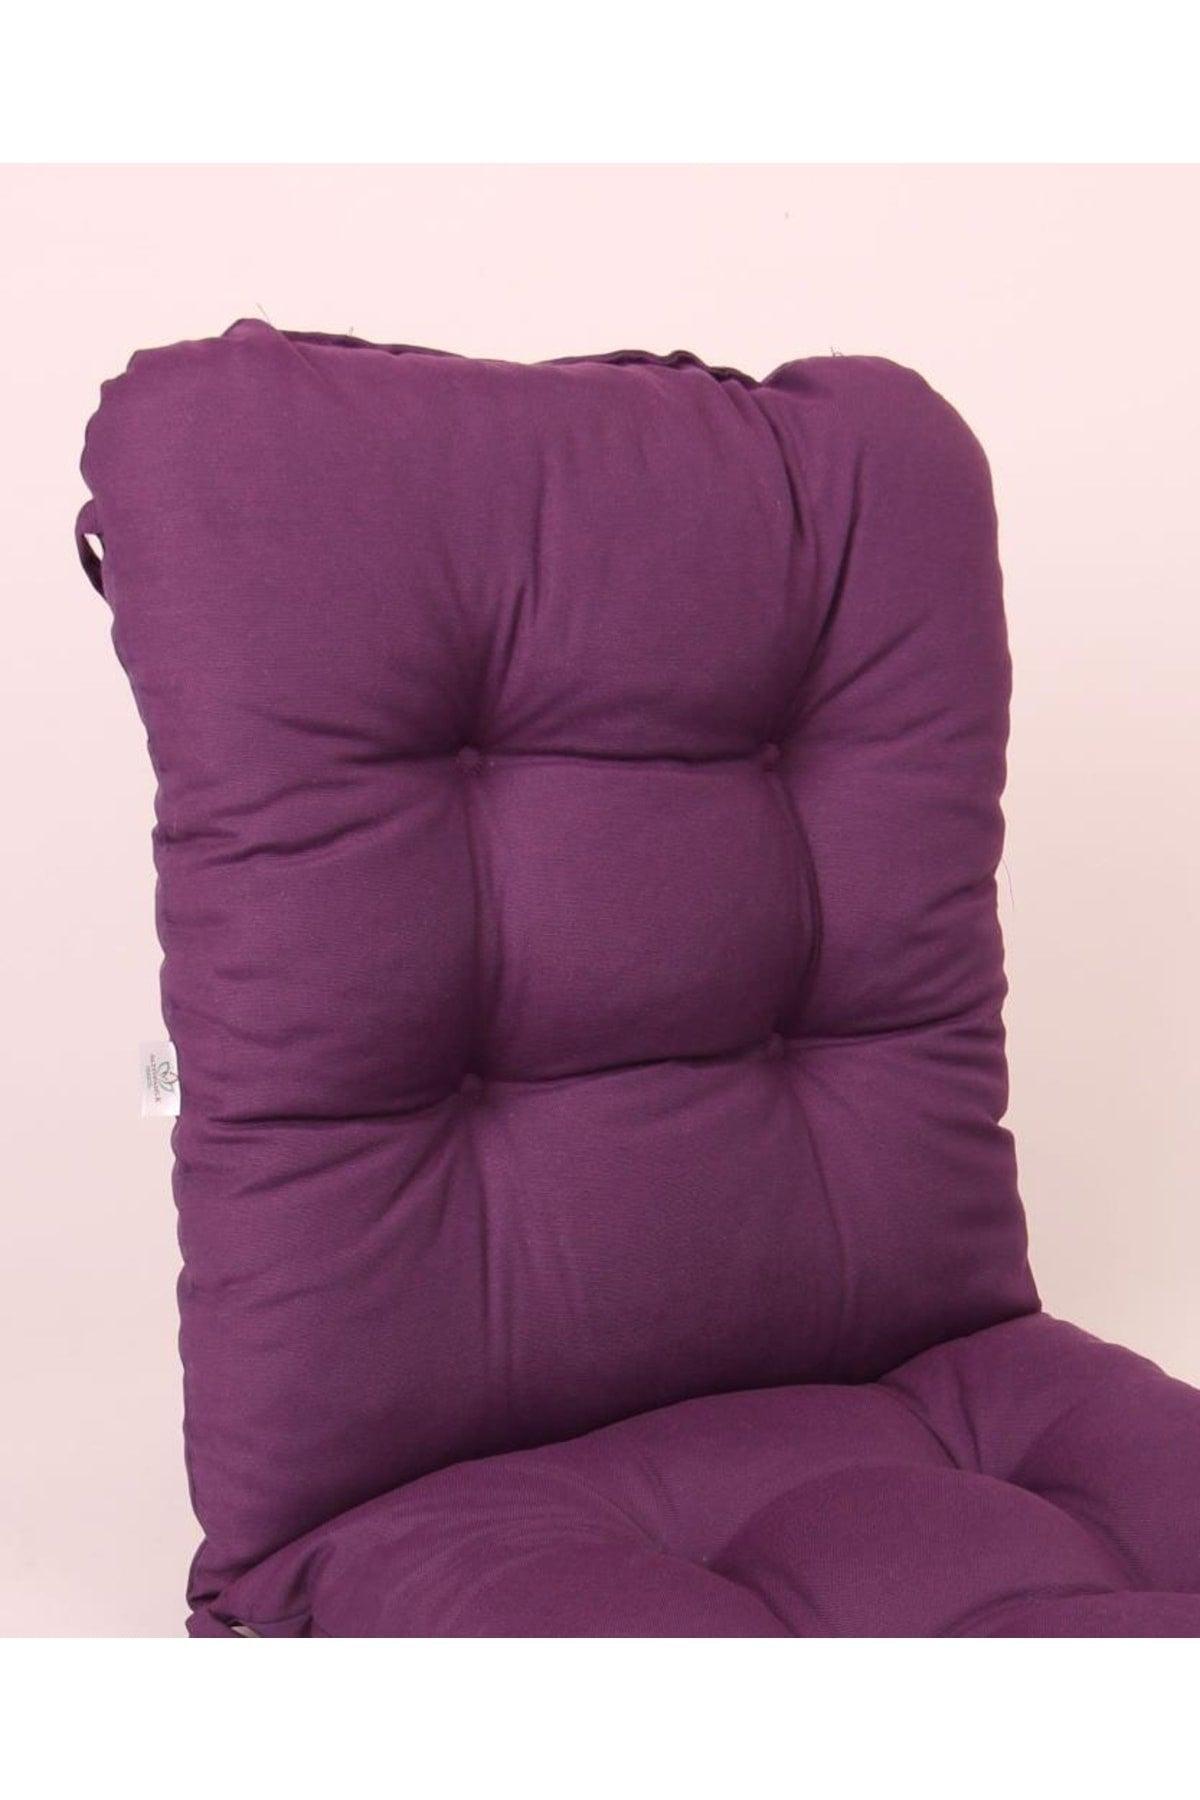 Neva Pofidik Purple Backed Chair Cushion Specially Stitched Laced 44x94 Cm - Swordslife